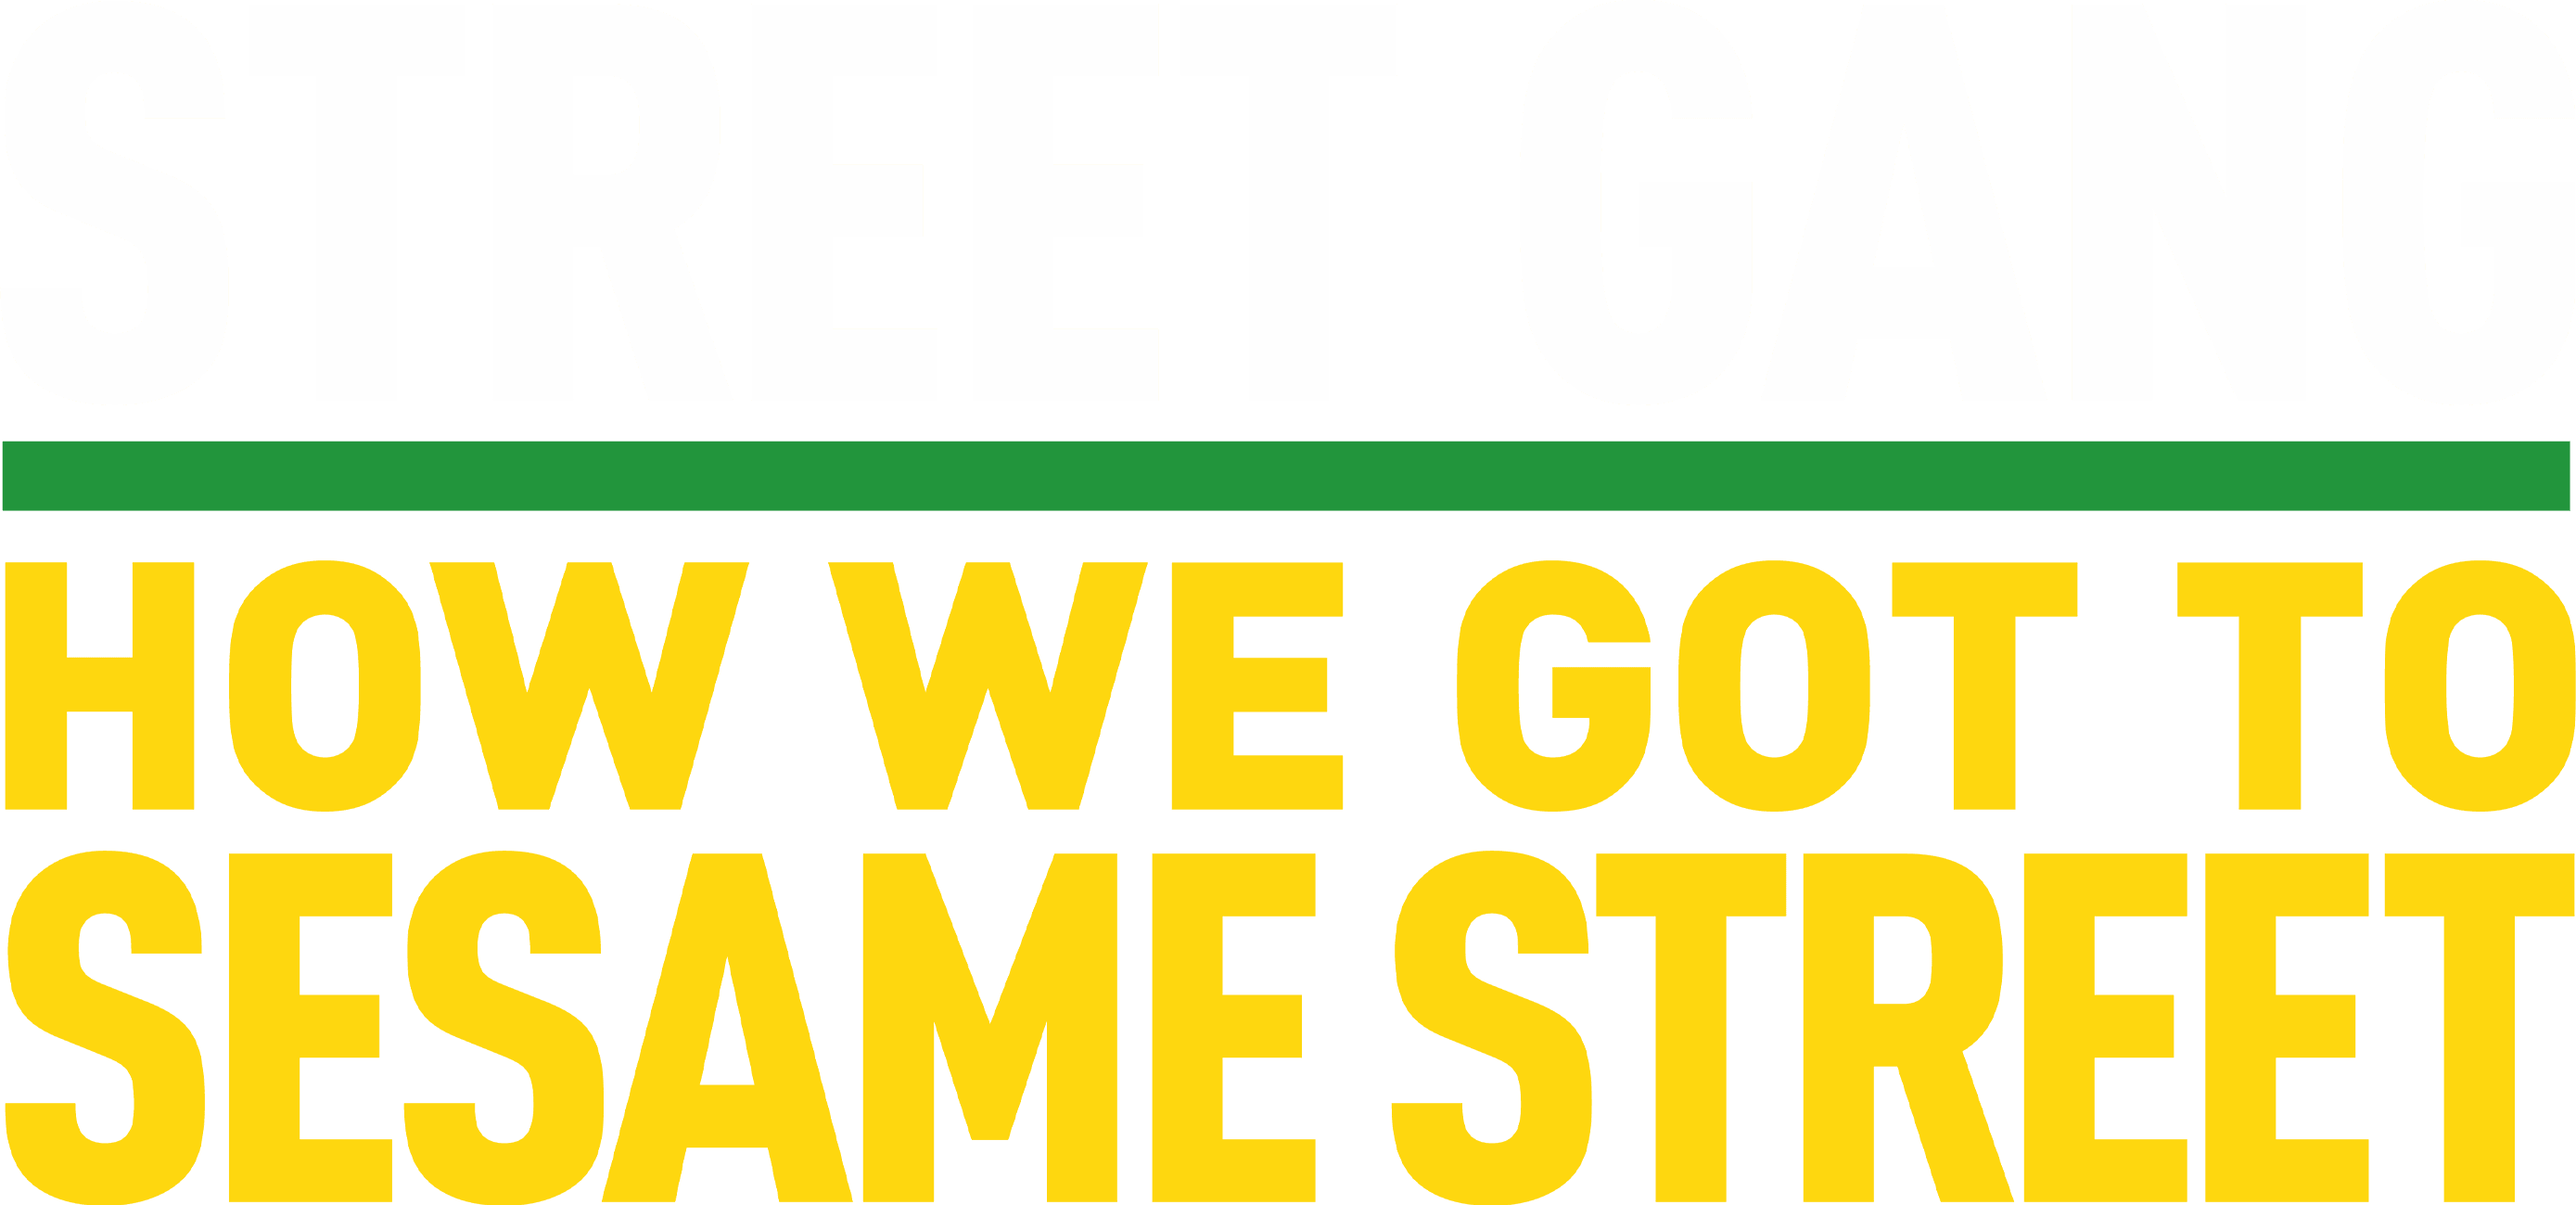 Street Gang: How We Got to Sesame Street logo